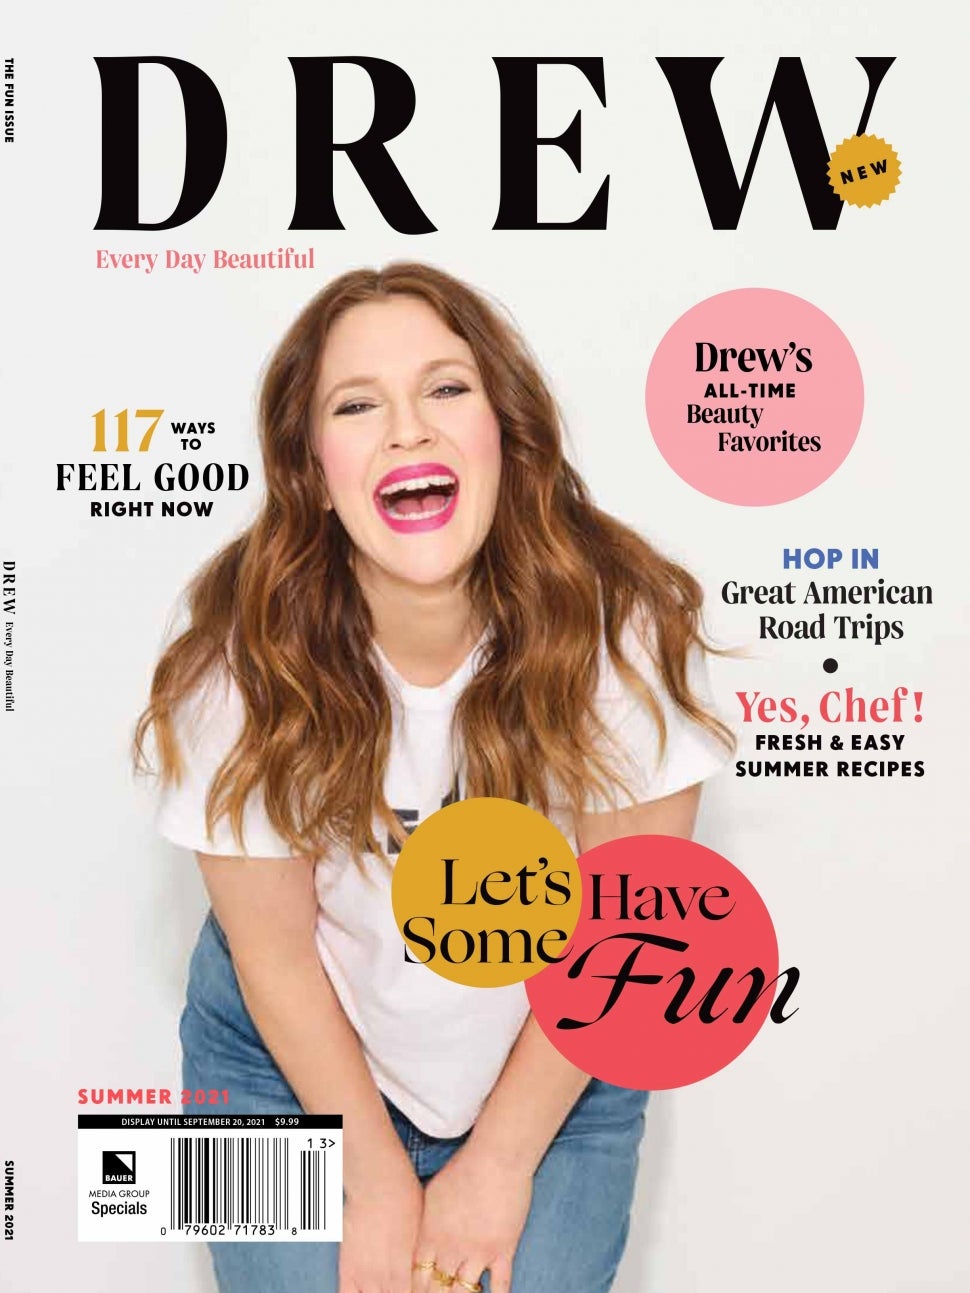 Drew Barrymore DREW cover